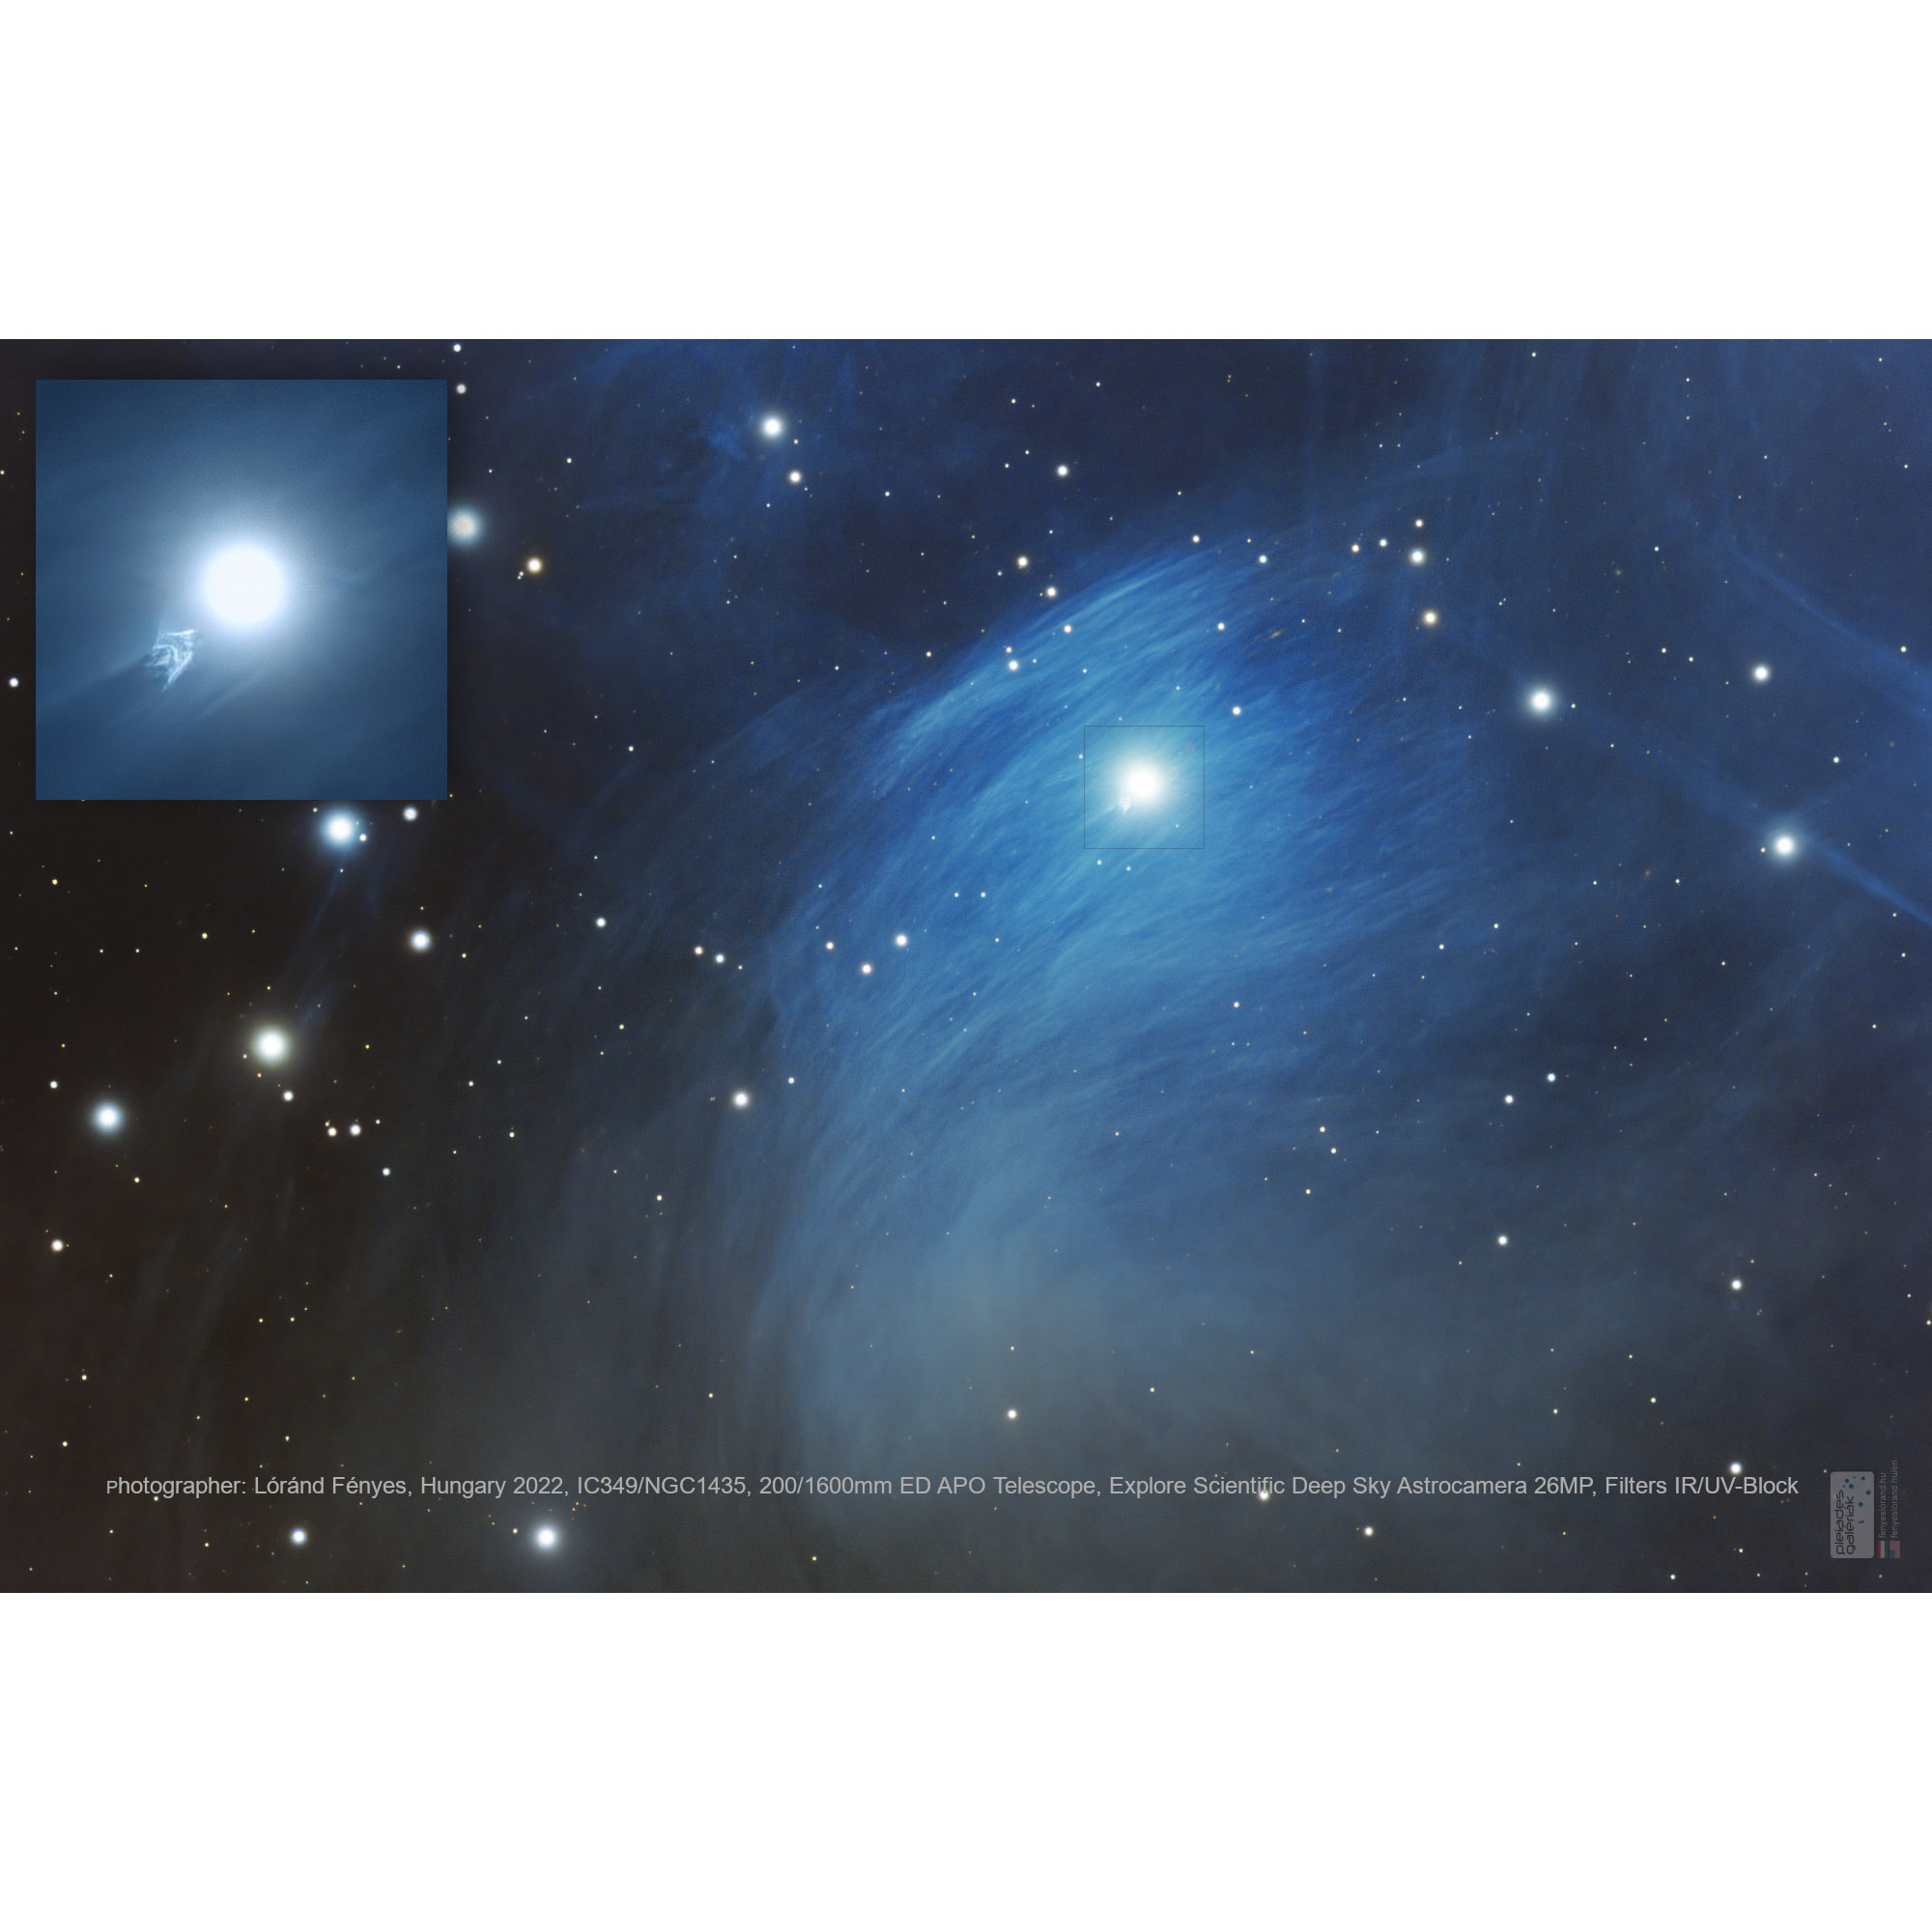 EXPLORE SCIENTIFIC Camera astronomica 26 MP per deep sky